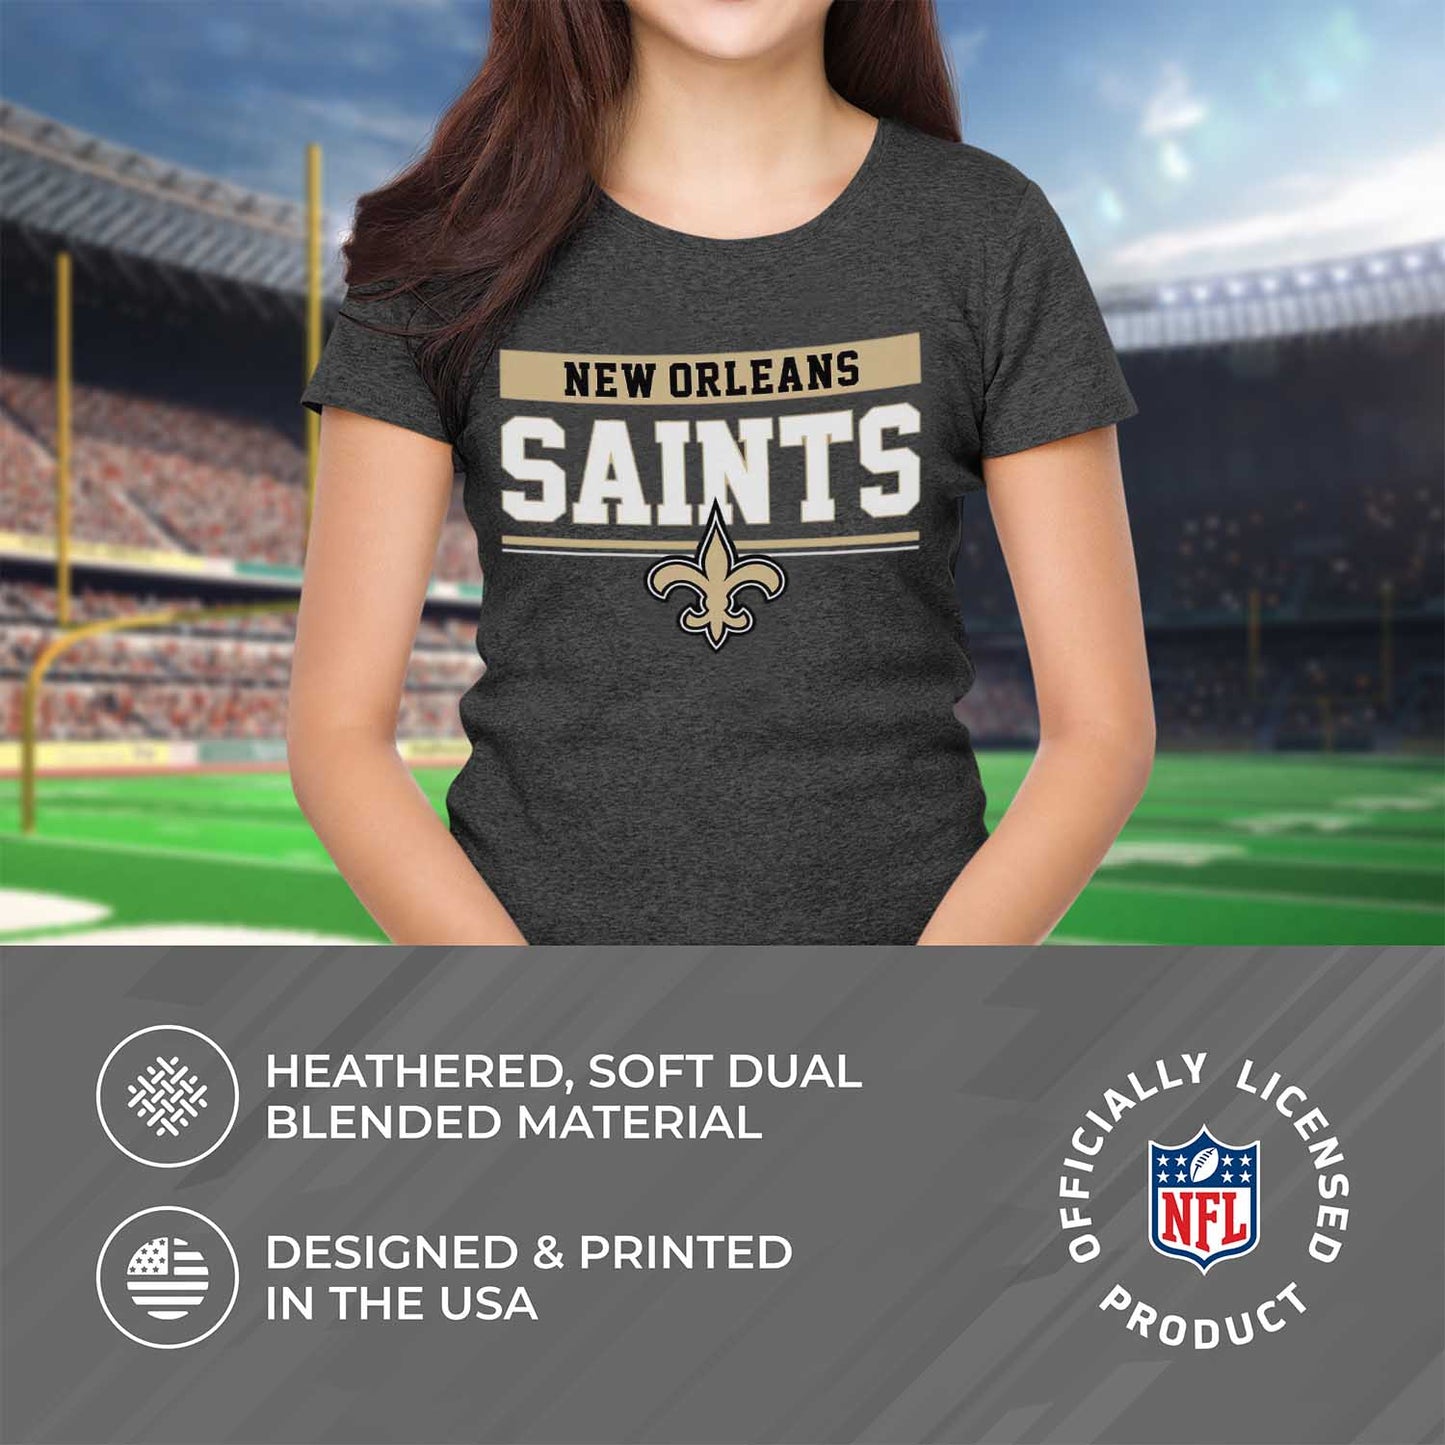 New Orleans Saints NFL Women's Team Block Charcoal Tagless T-Shirt - Charcoal